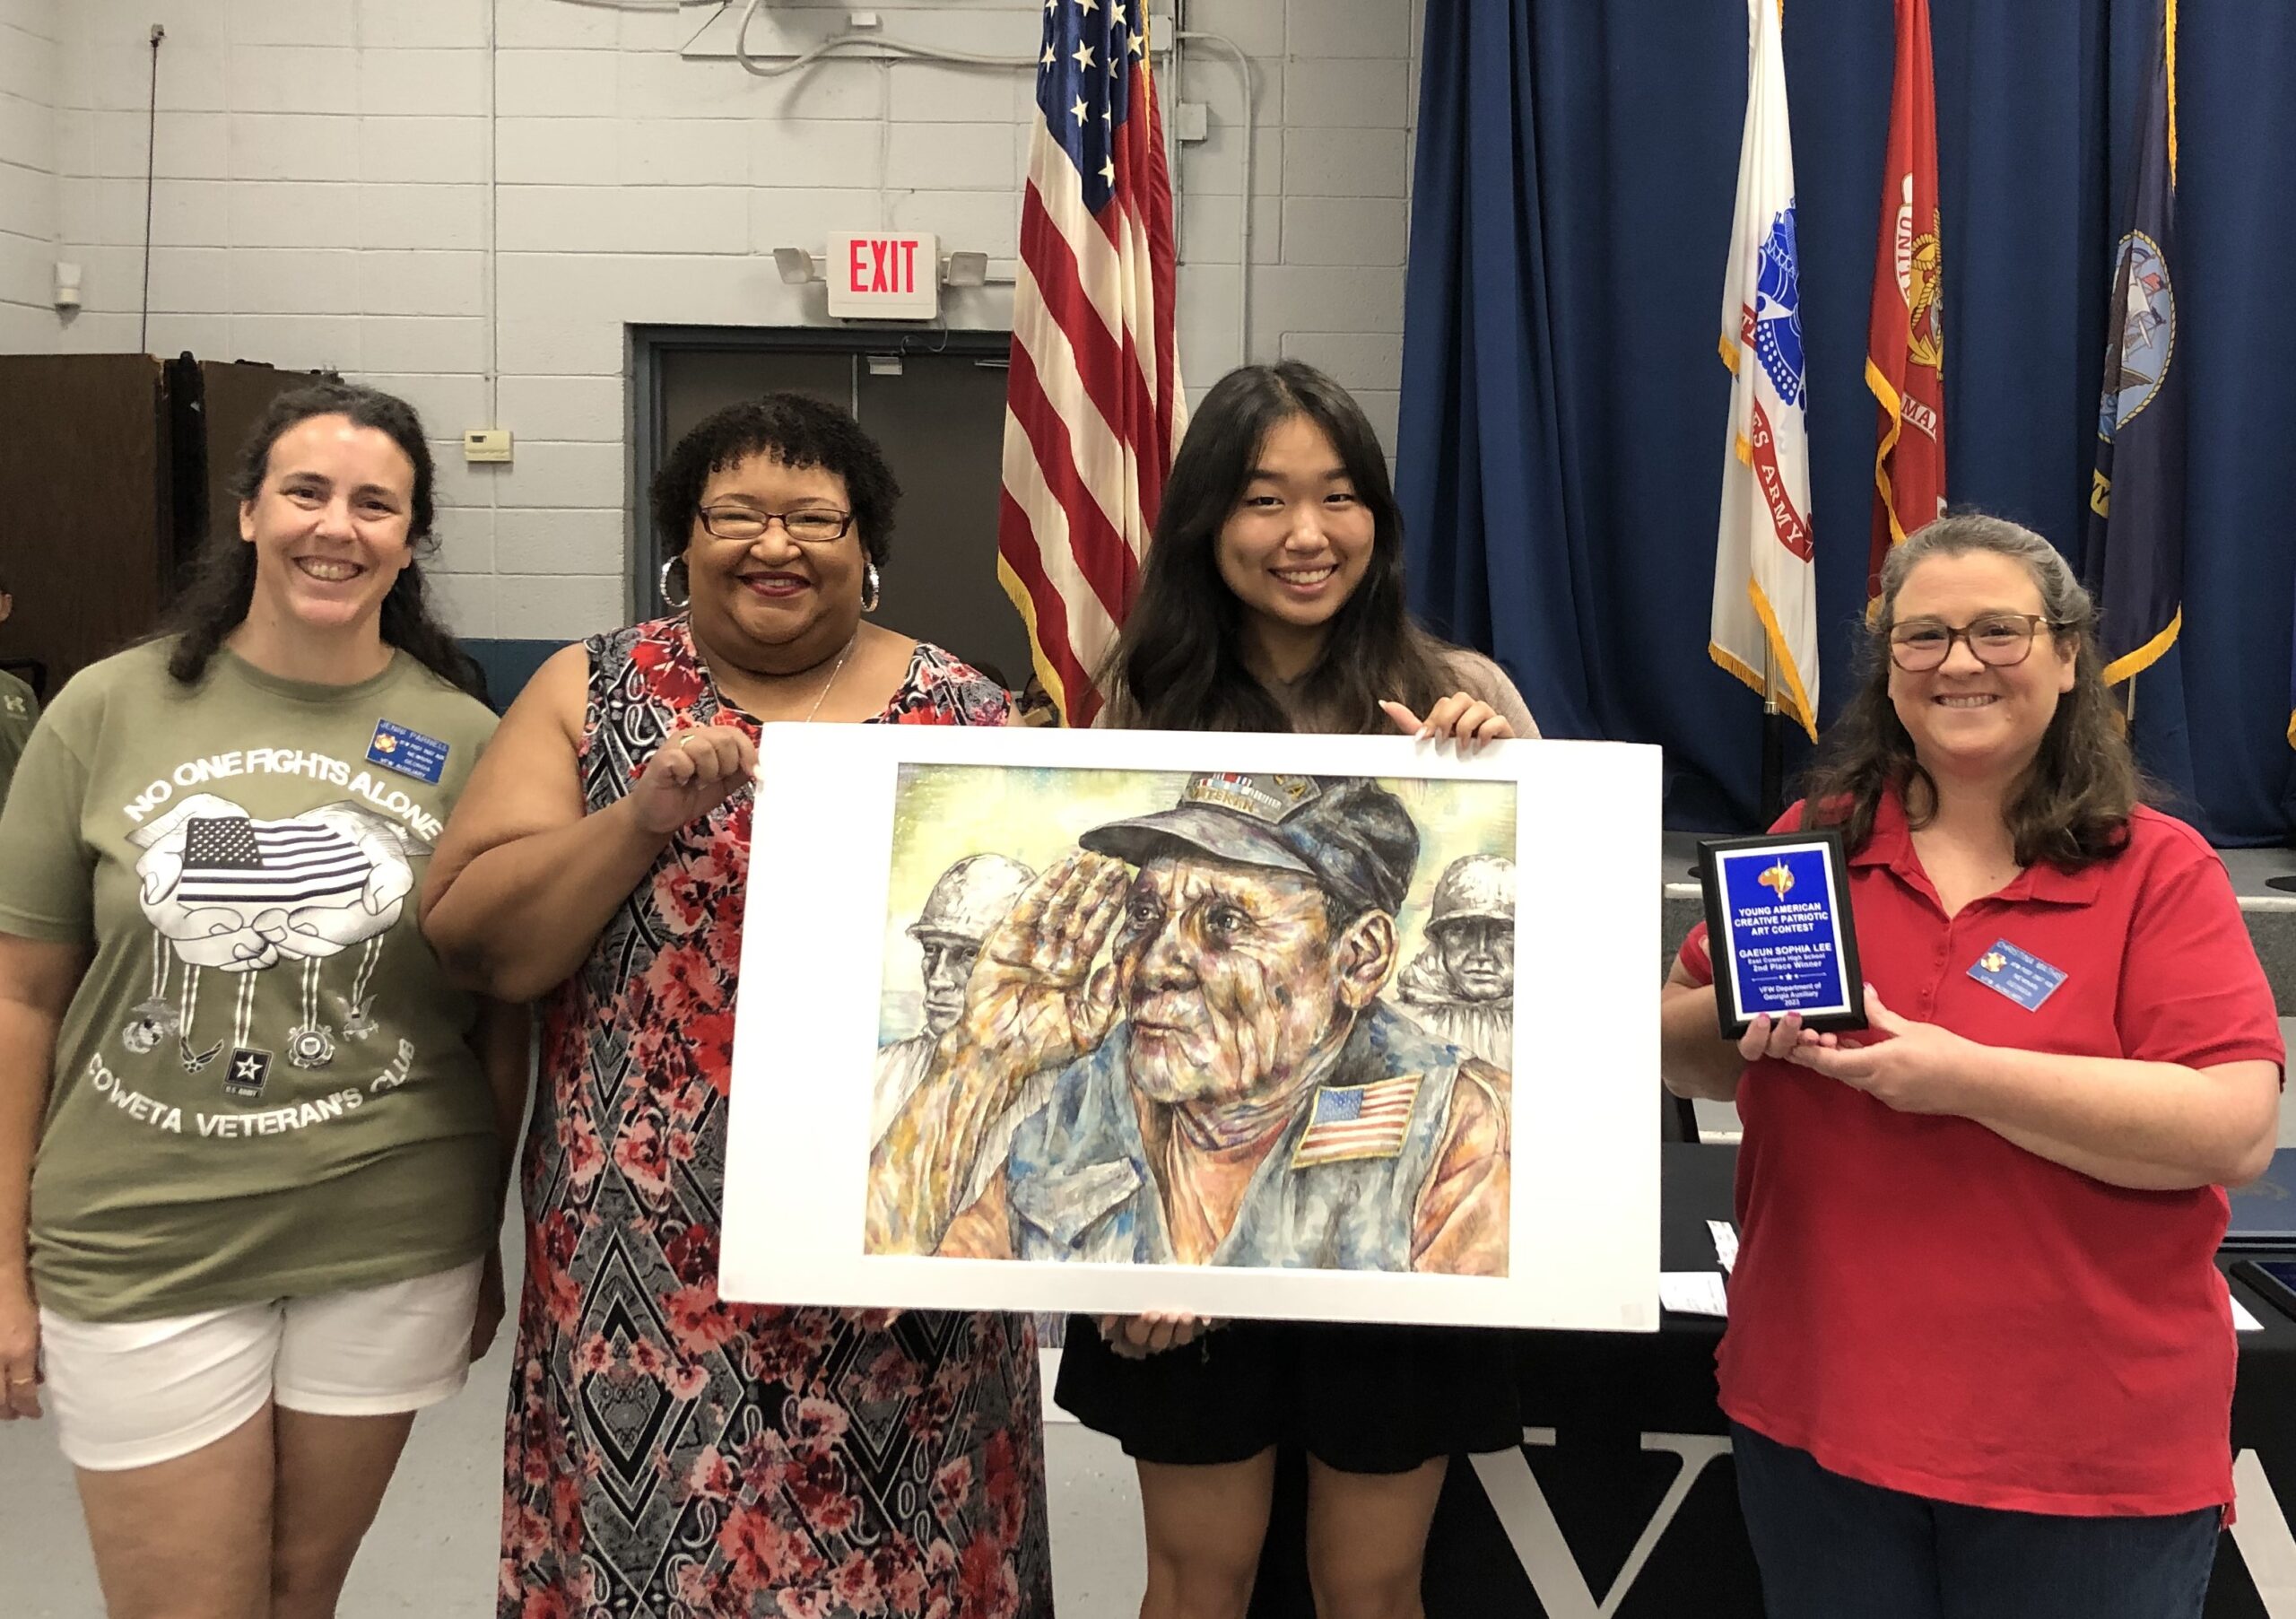 Patriotic Art Winner Recognized Nationally